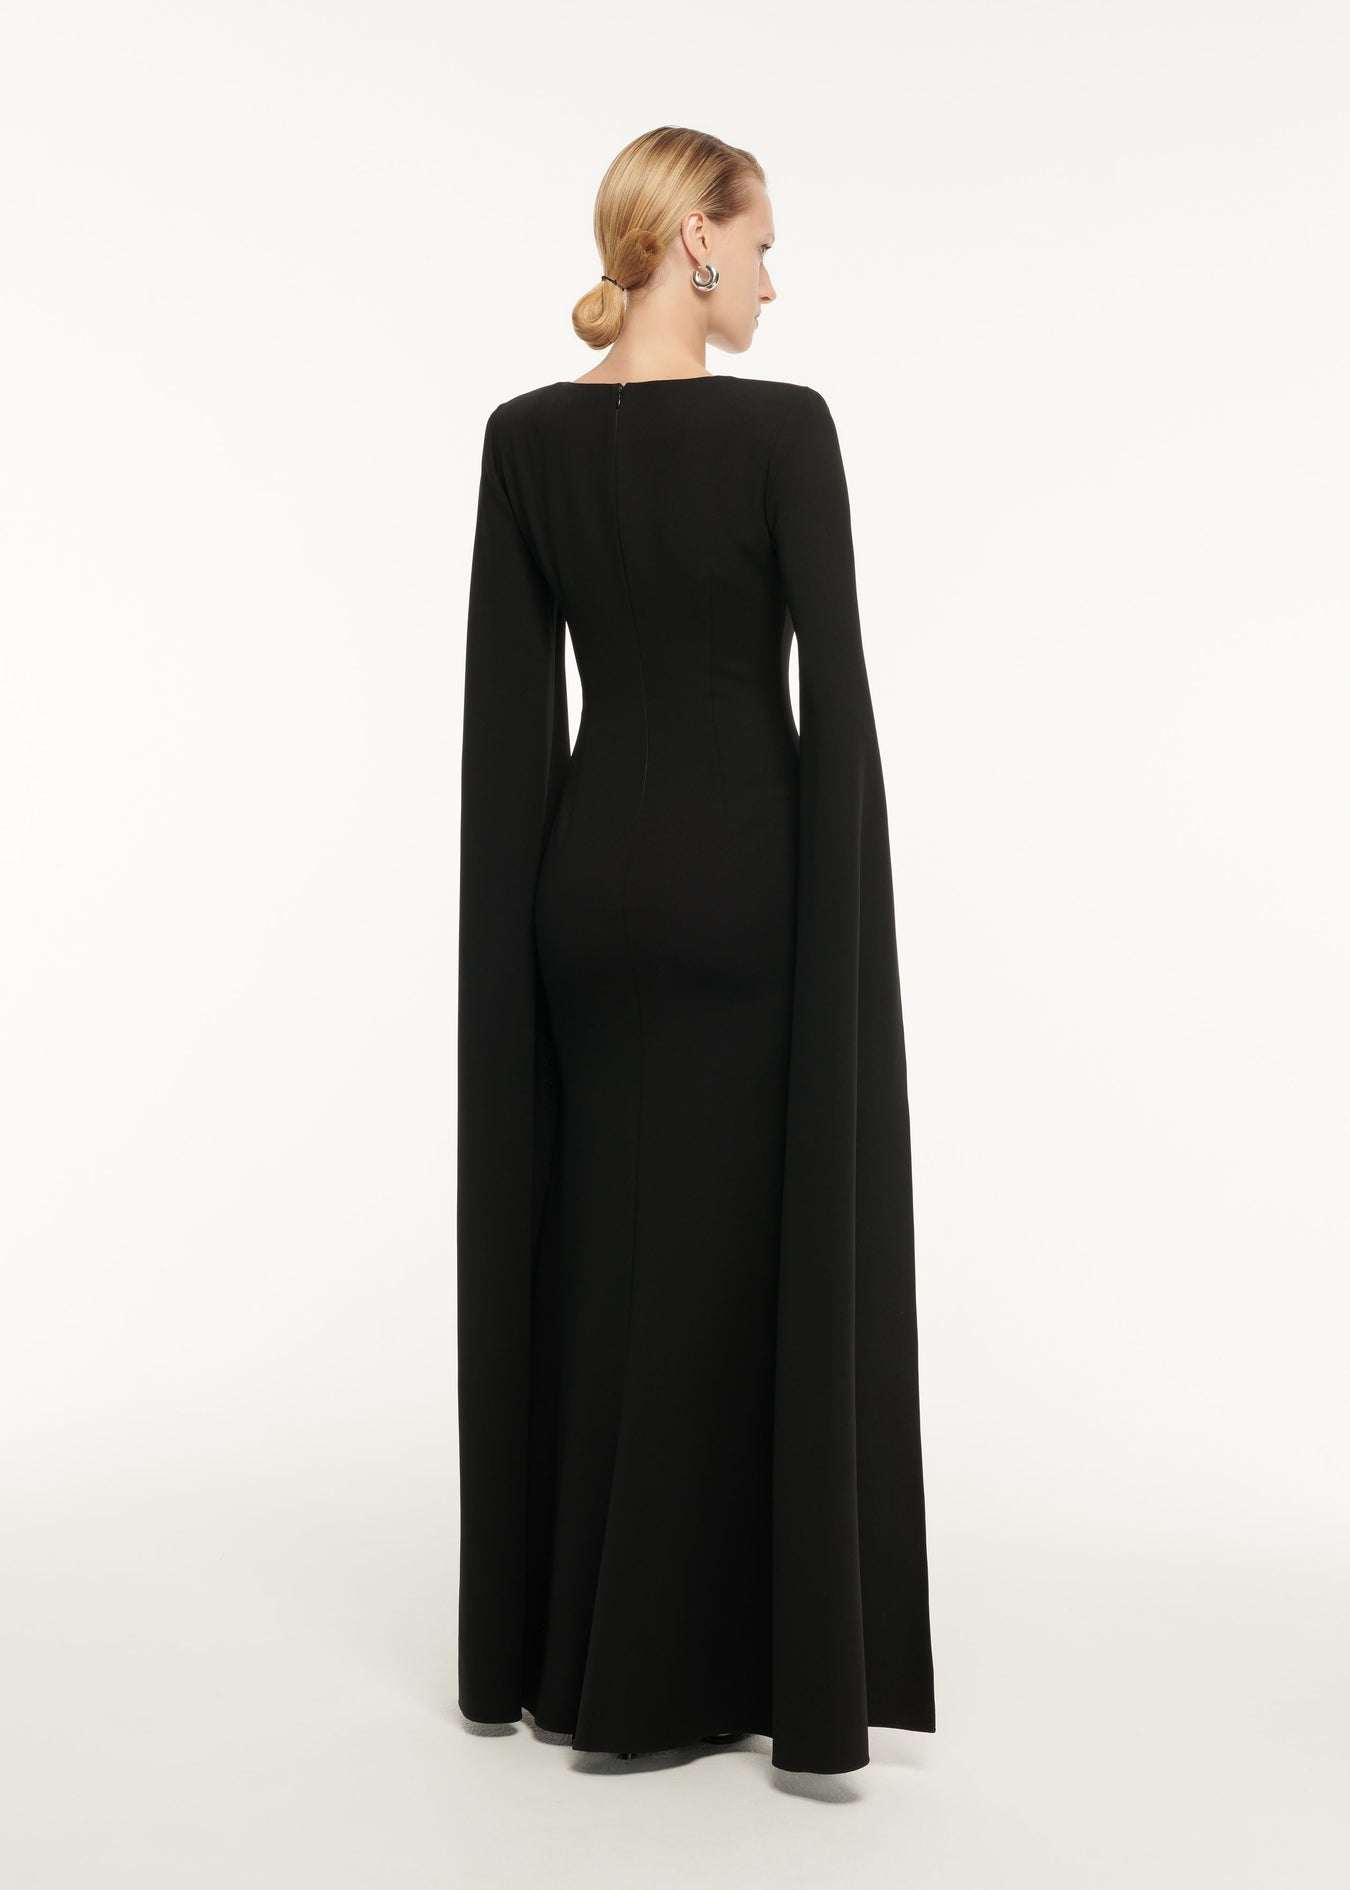 The back of a woman wearing the Asymmetric Diamante Maxi Dress